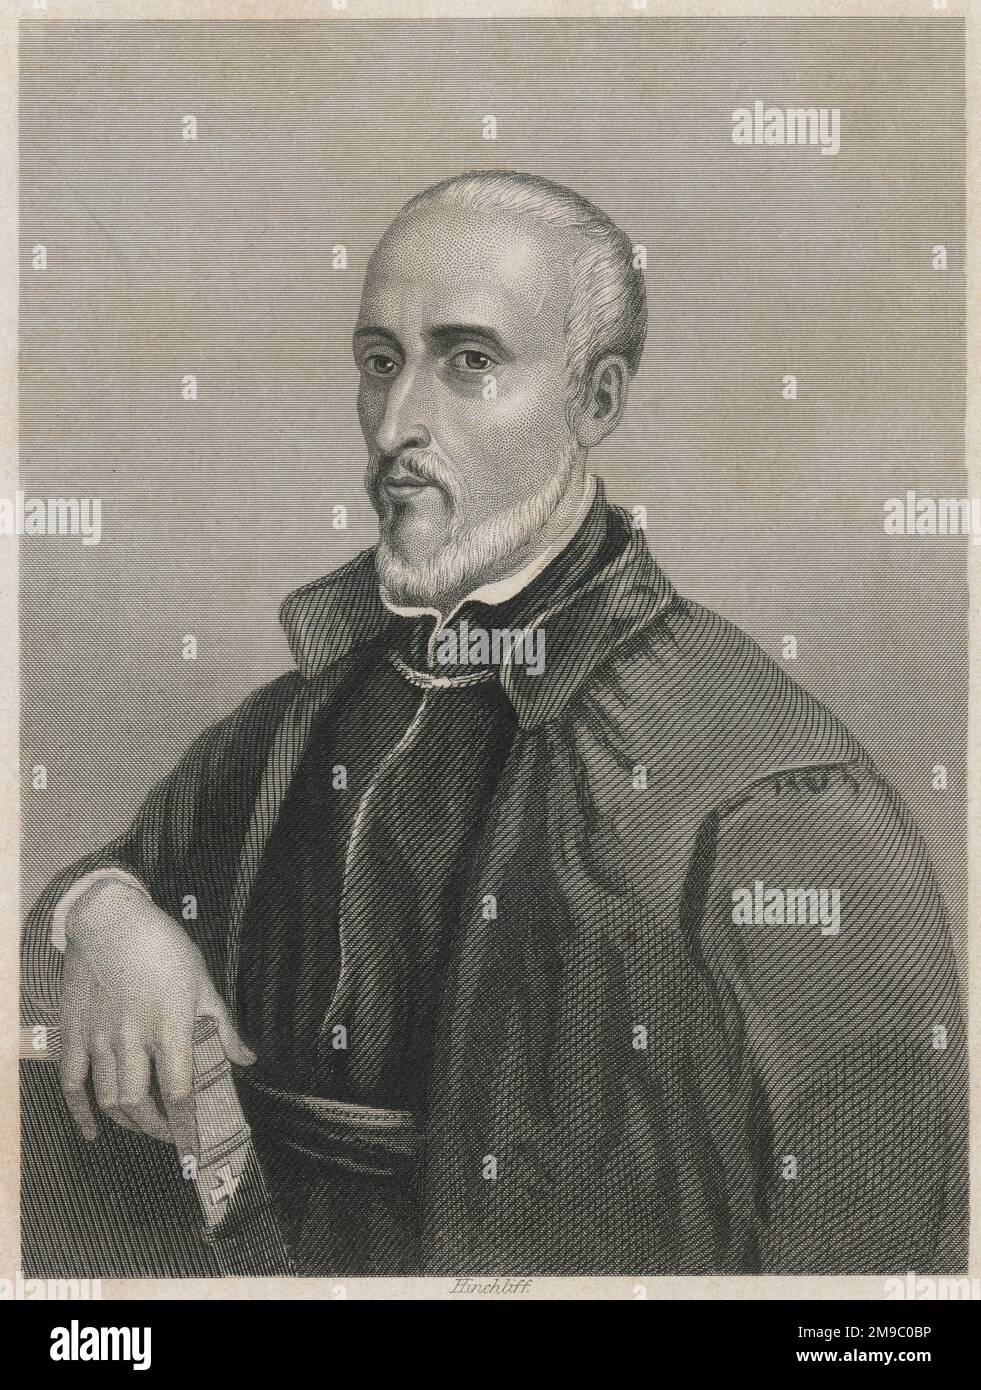 Antique circa 1860 engraving, portrait of Francis Borgia. Francis Borgia SJ (1510-1572) was a Spanish Jesuit priest. SOURCE: ORIGINAL ENGRAVING Stock Photo